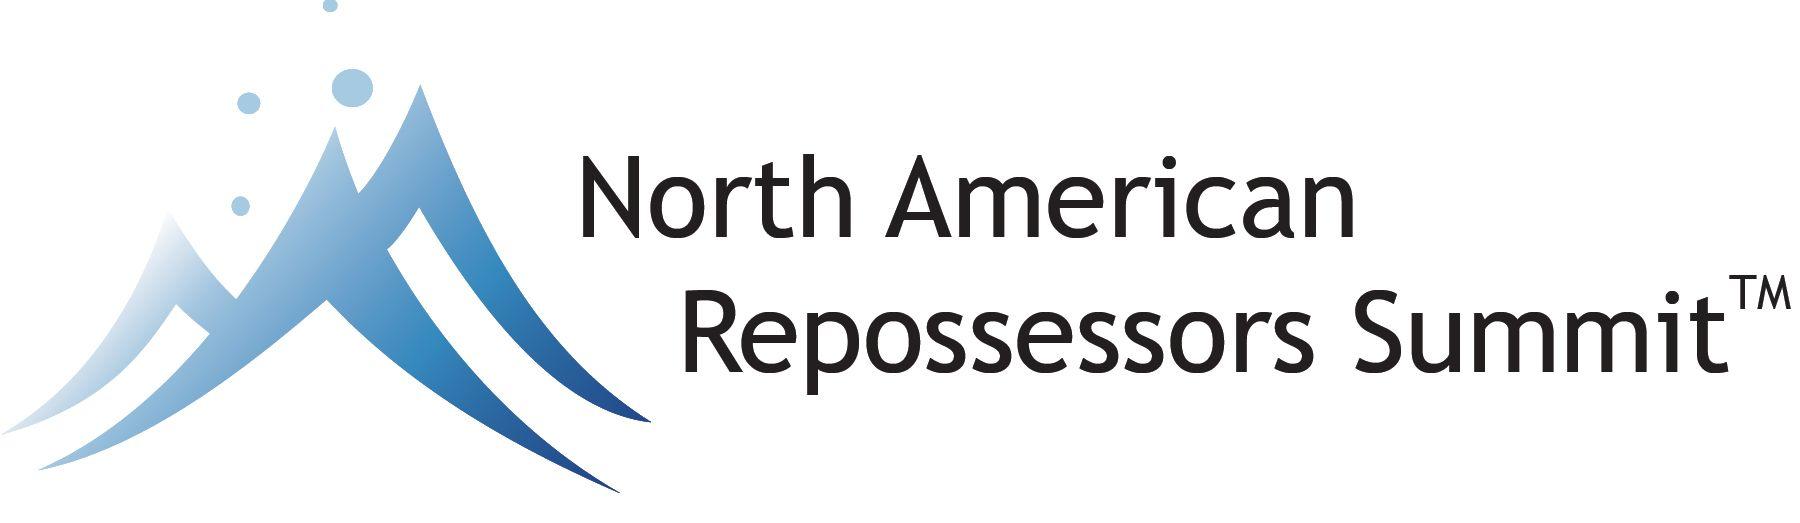 NARS Logo - NARS-LOGO - American Recovery Association